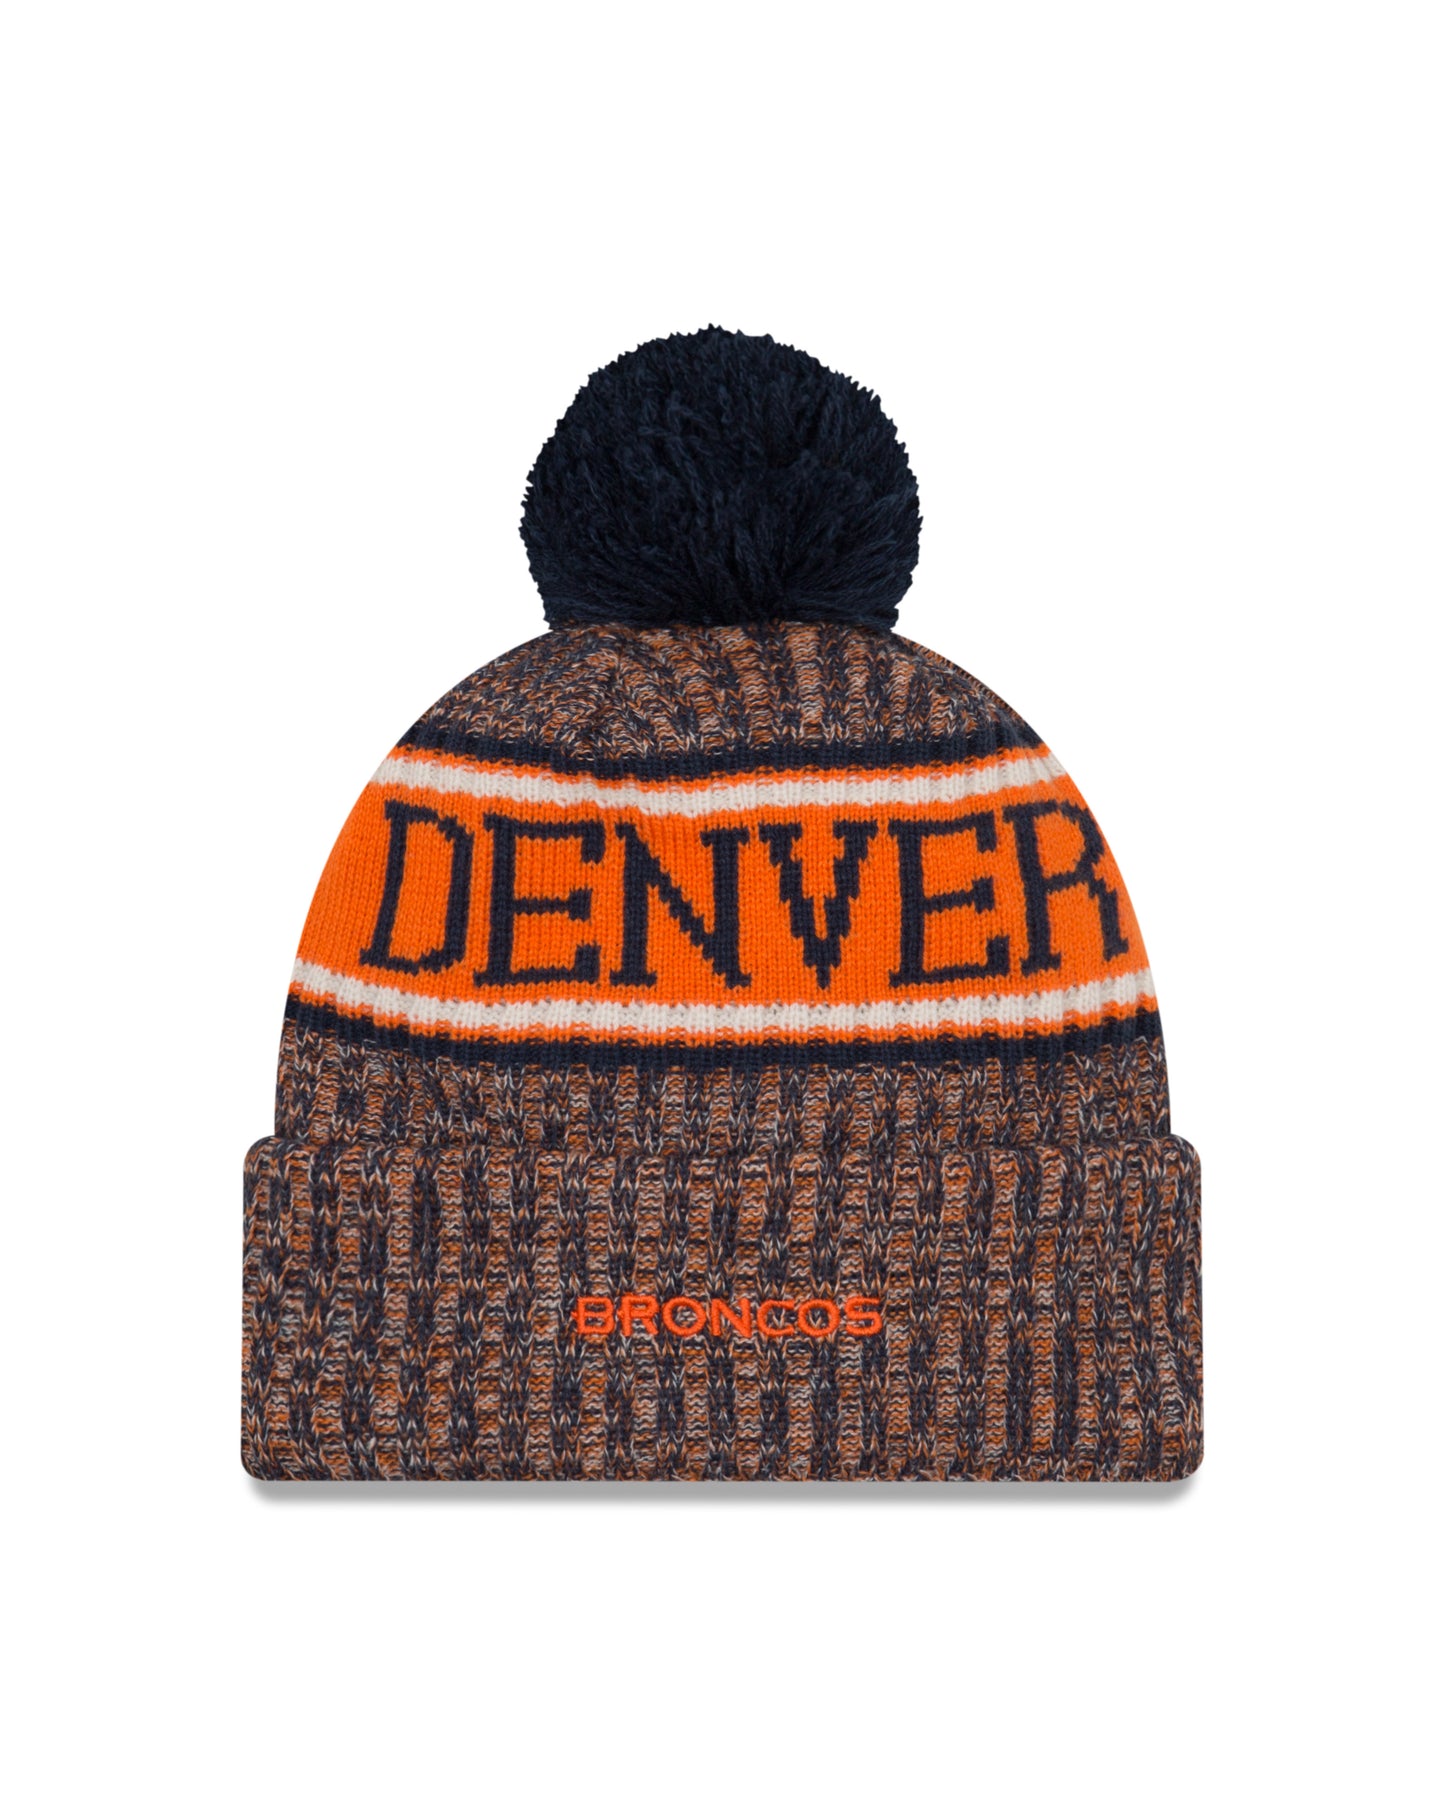 Denver Broncos New Era Sideline Alternate Sport Cuffed Pom Knit Hat- Navy